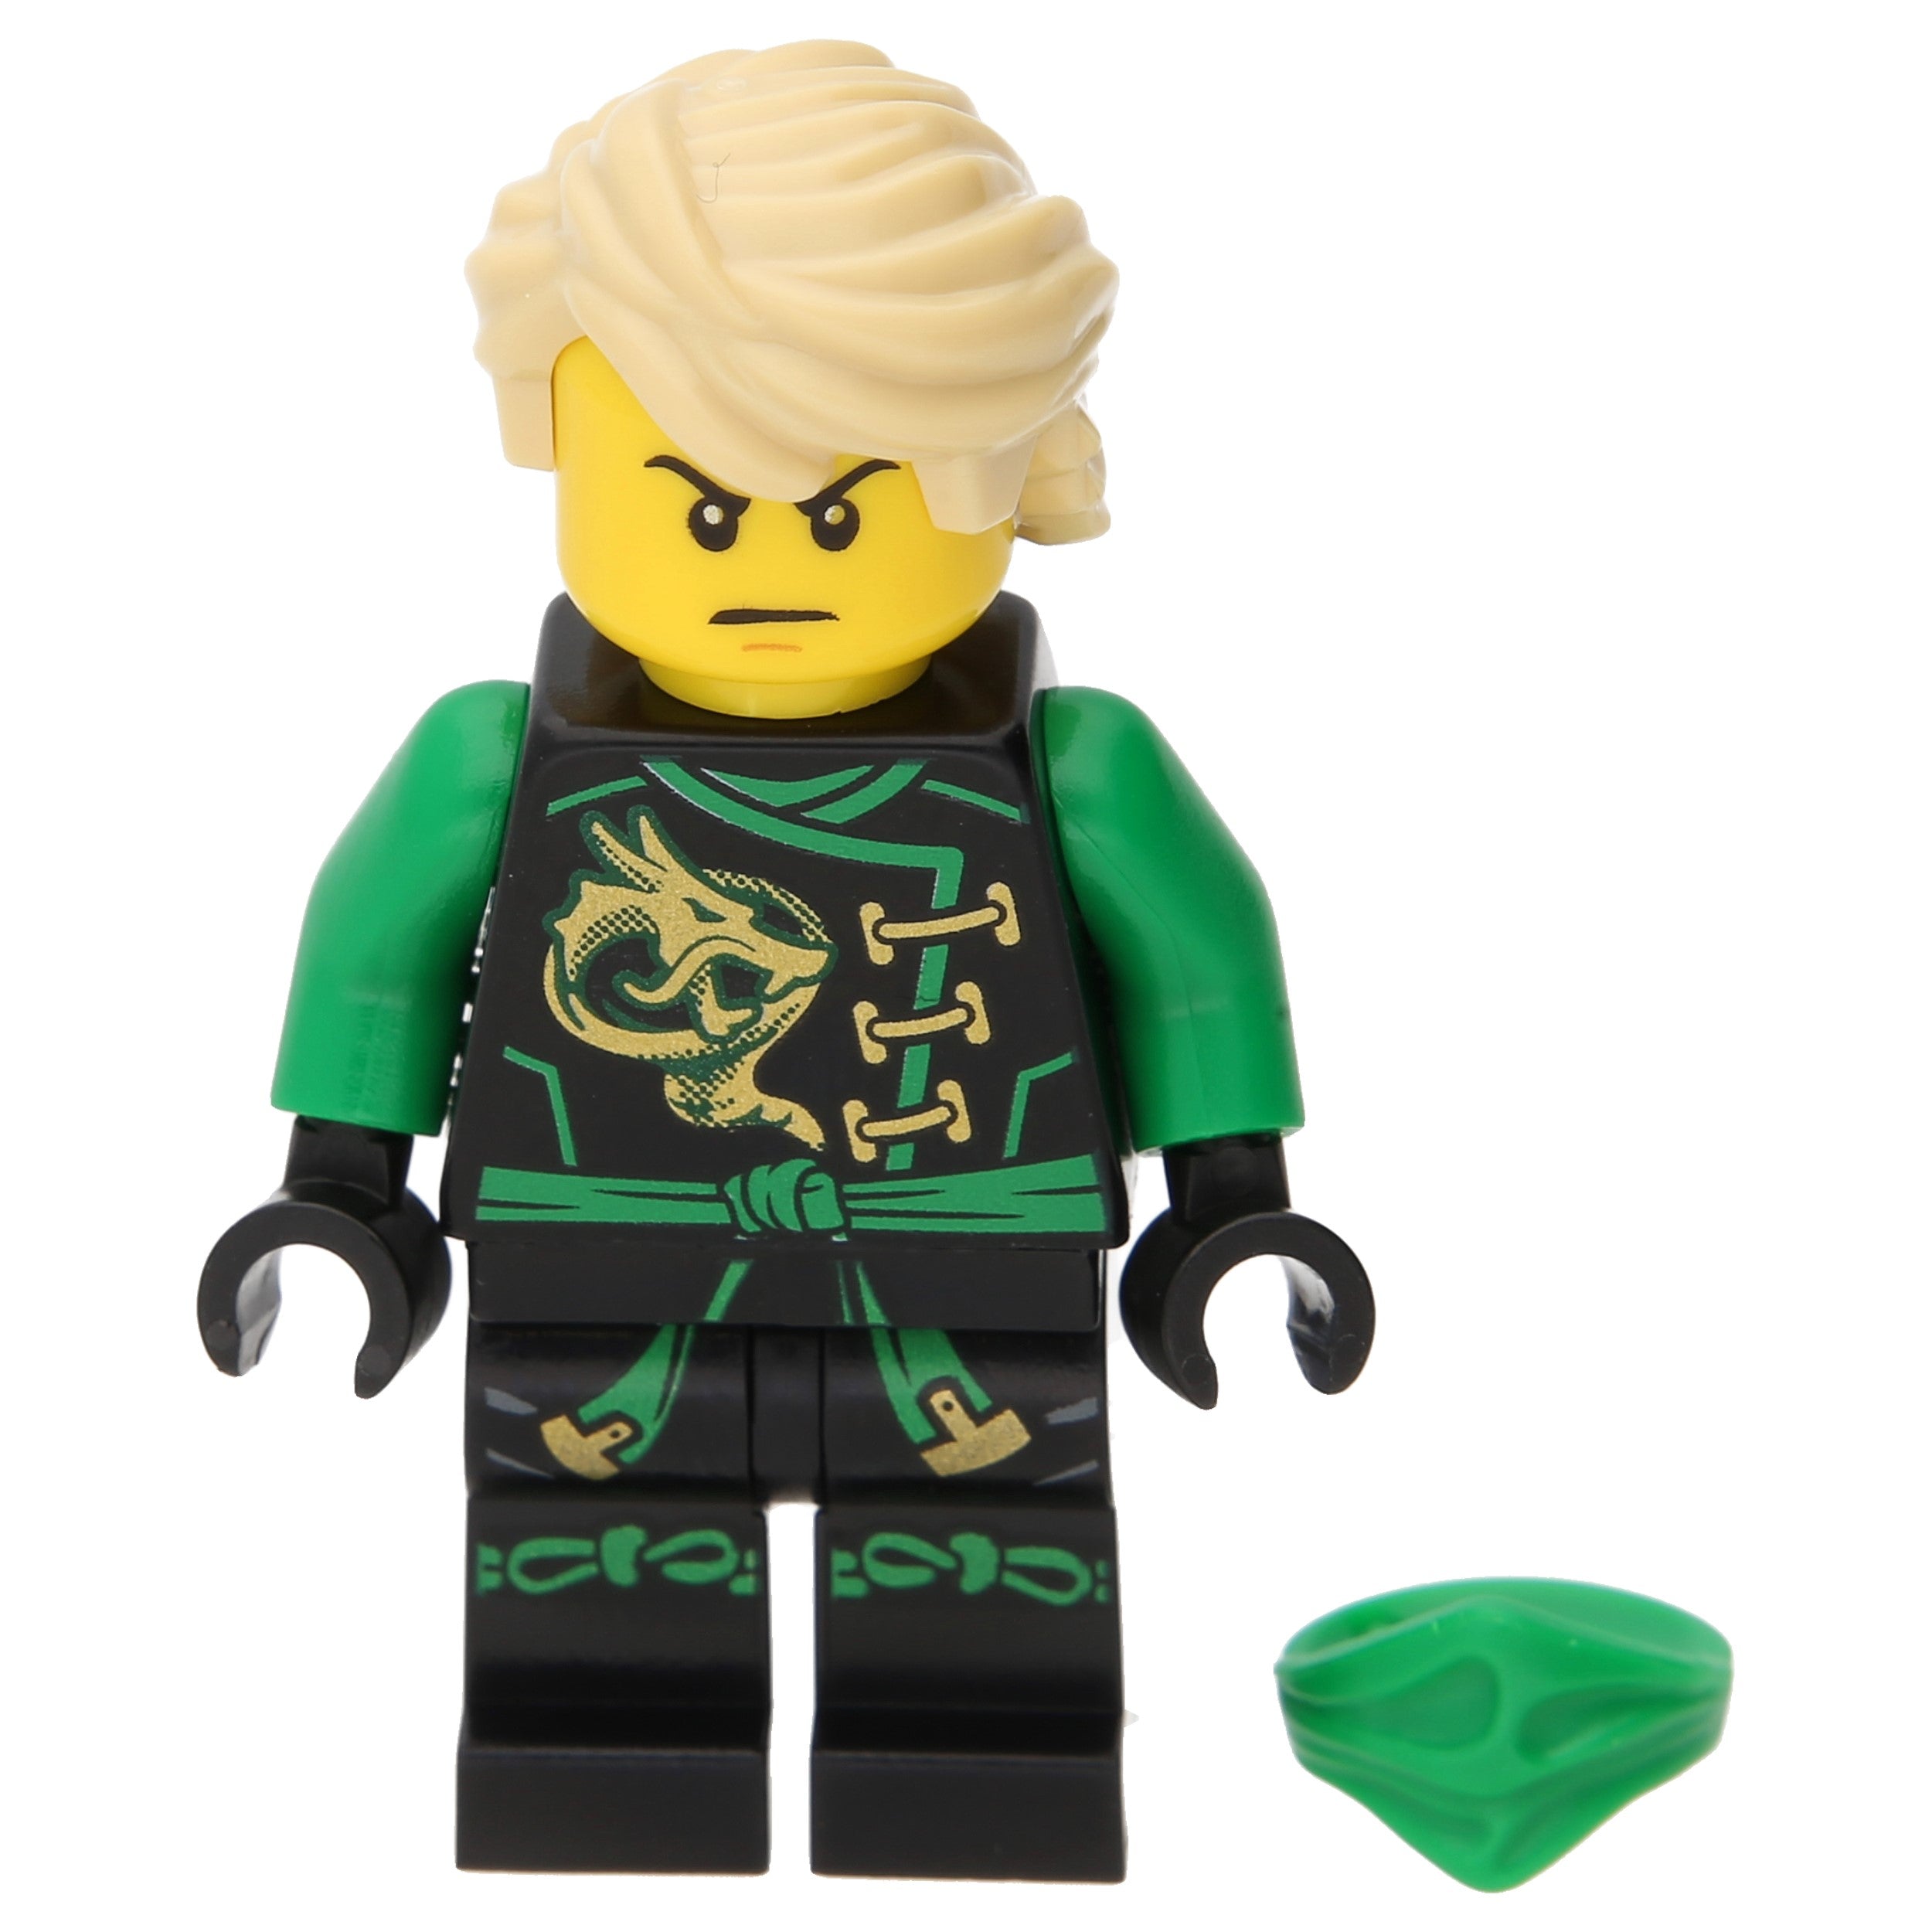 Lego Ninjago Minifigures - Lloyd with hair and mask (air pirates)